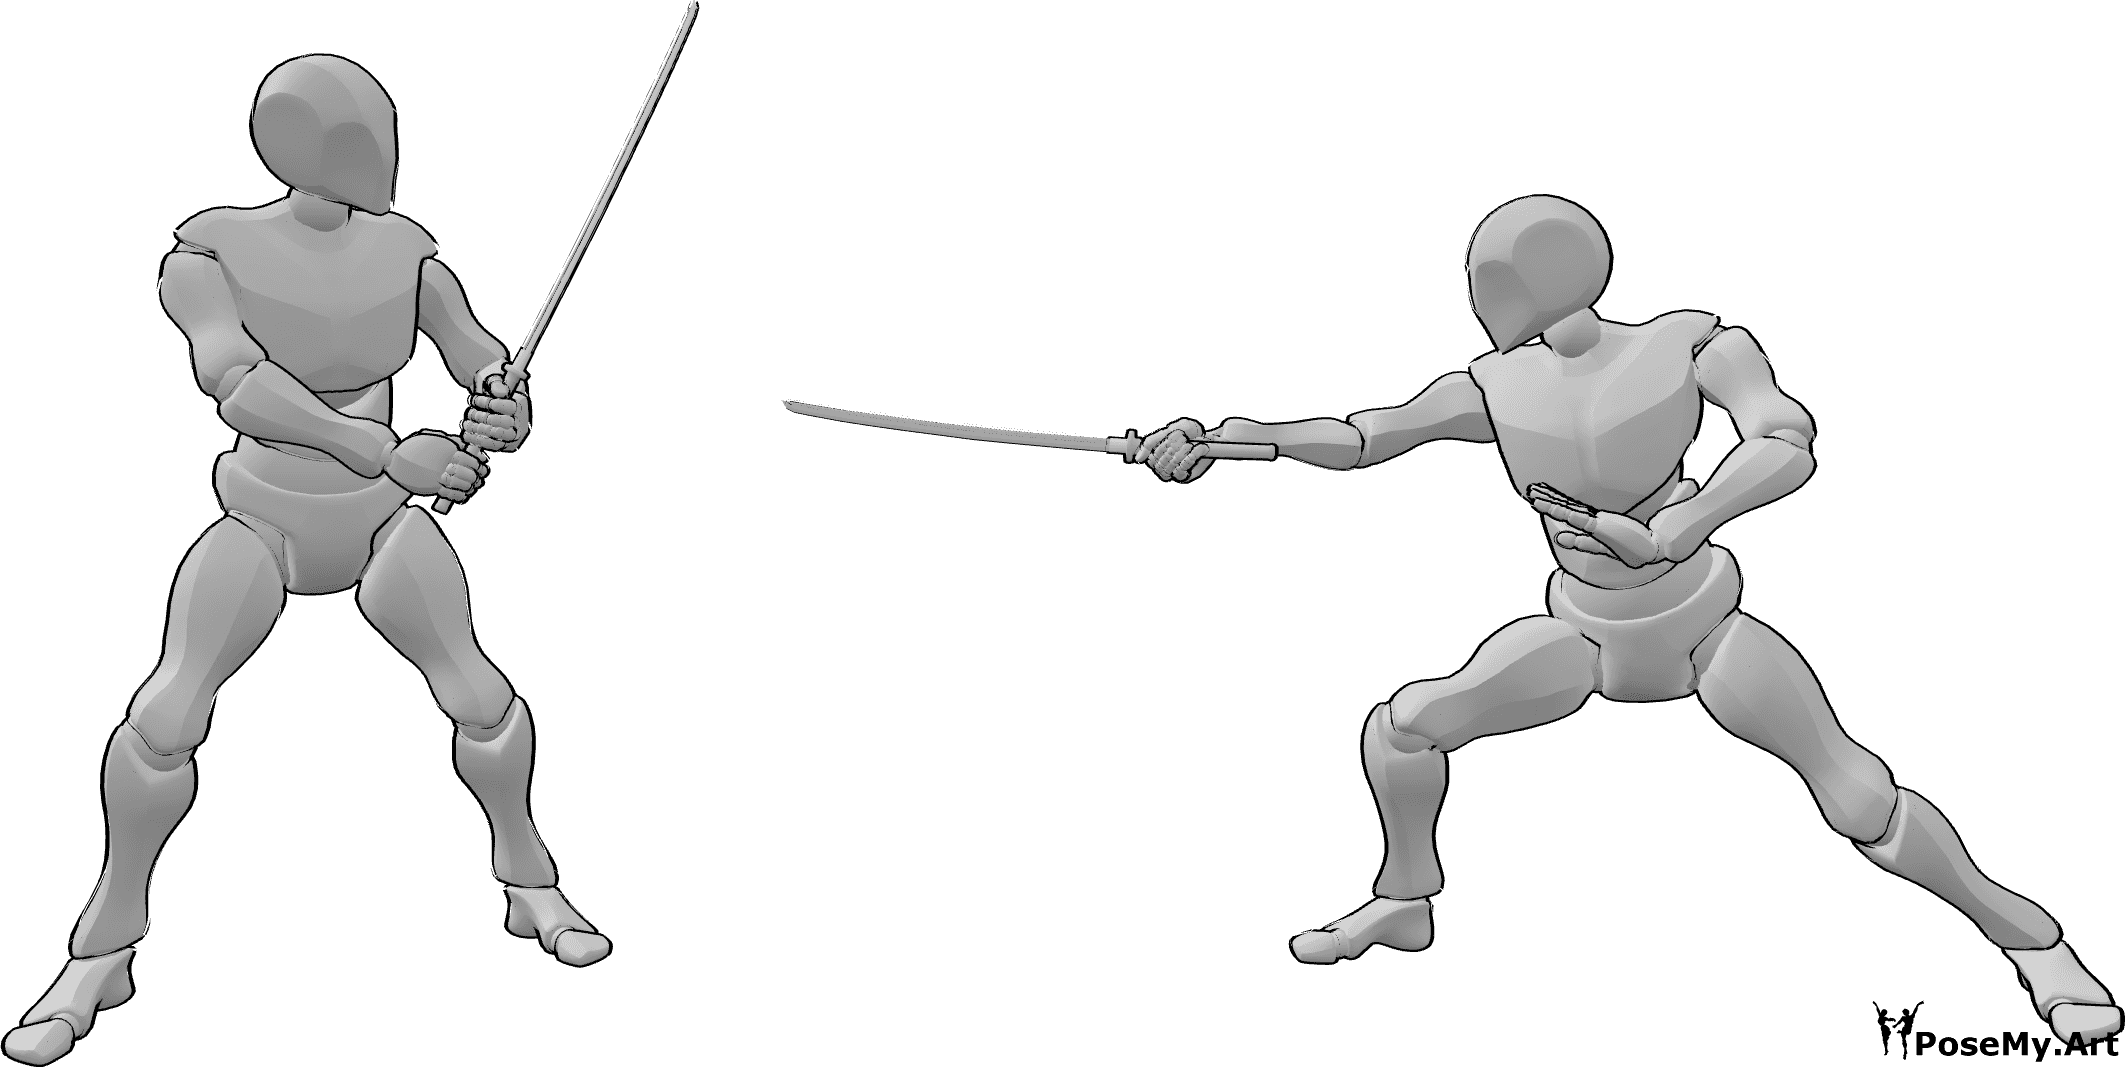 Anime Dual Sword Fighting Poses